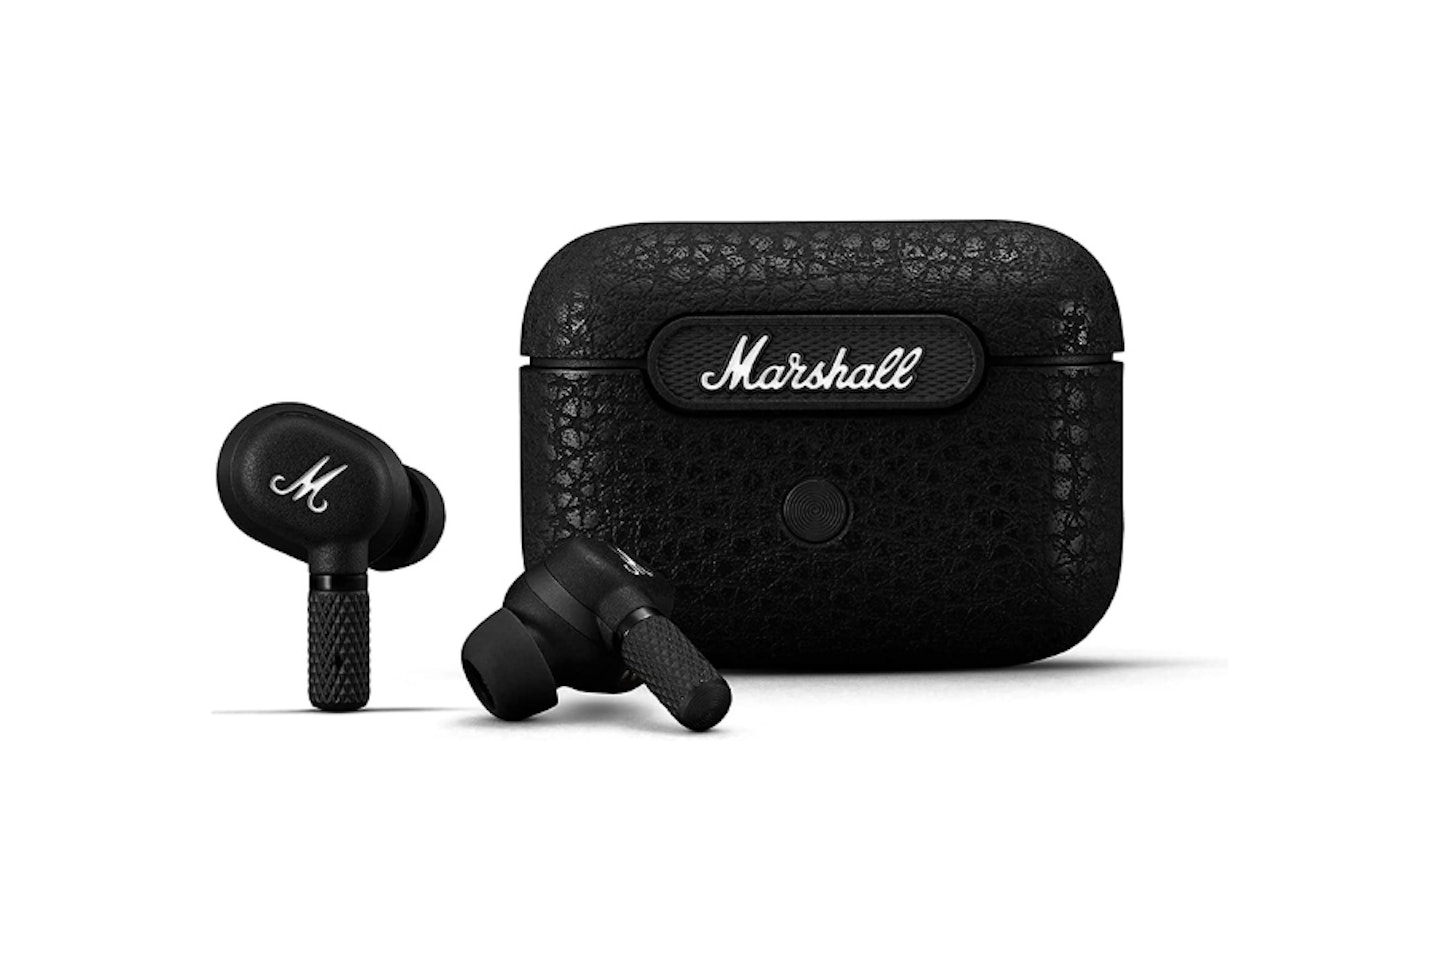 Marshall Motif A.N.C earphones